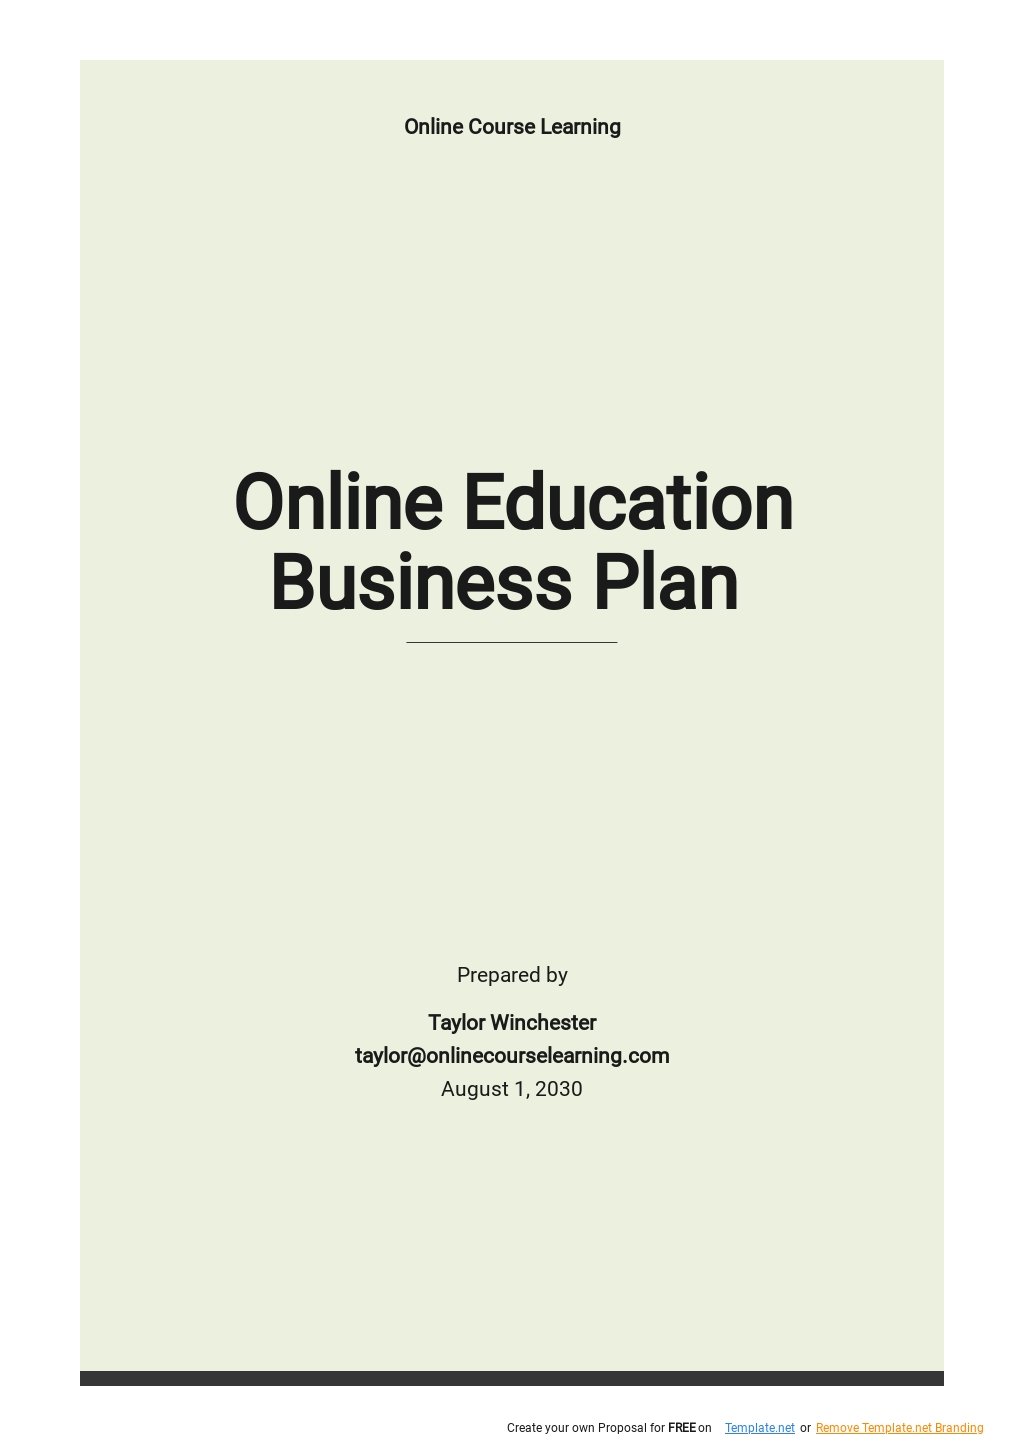 Online Education Business Plan Template